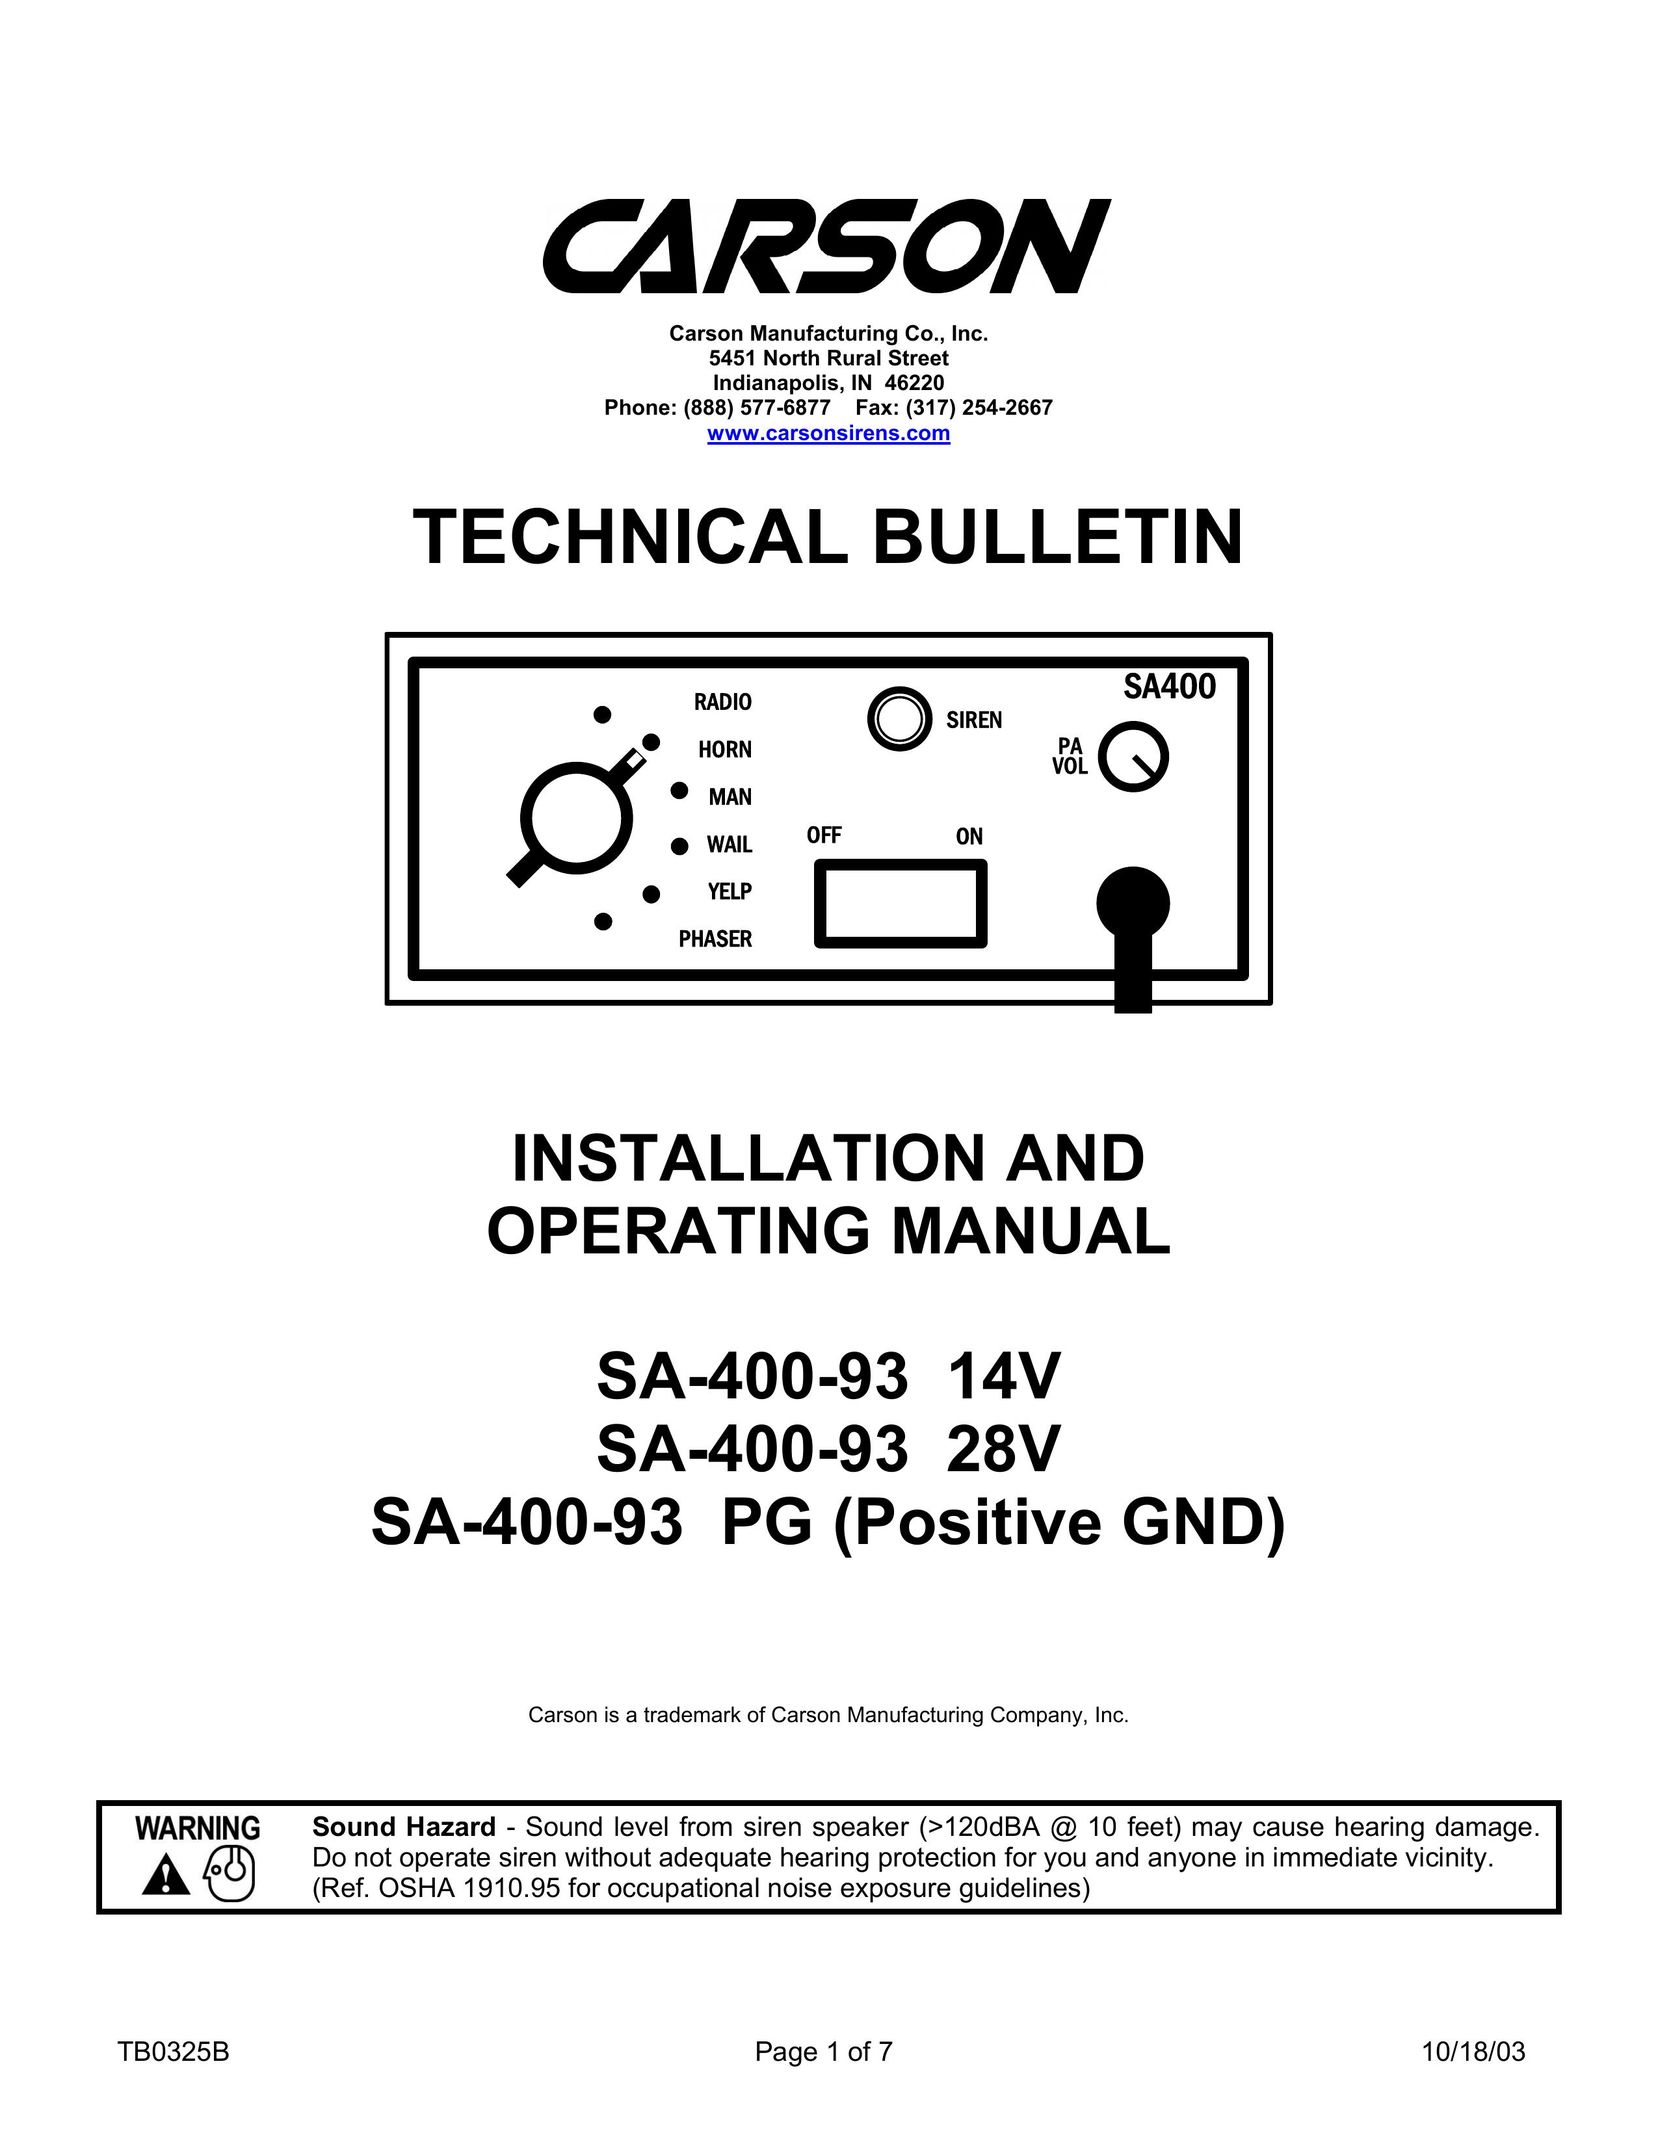 Carson SA-400-93 PG Stereo Amplifier User Manual